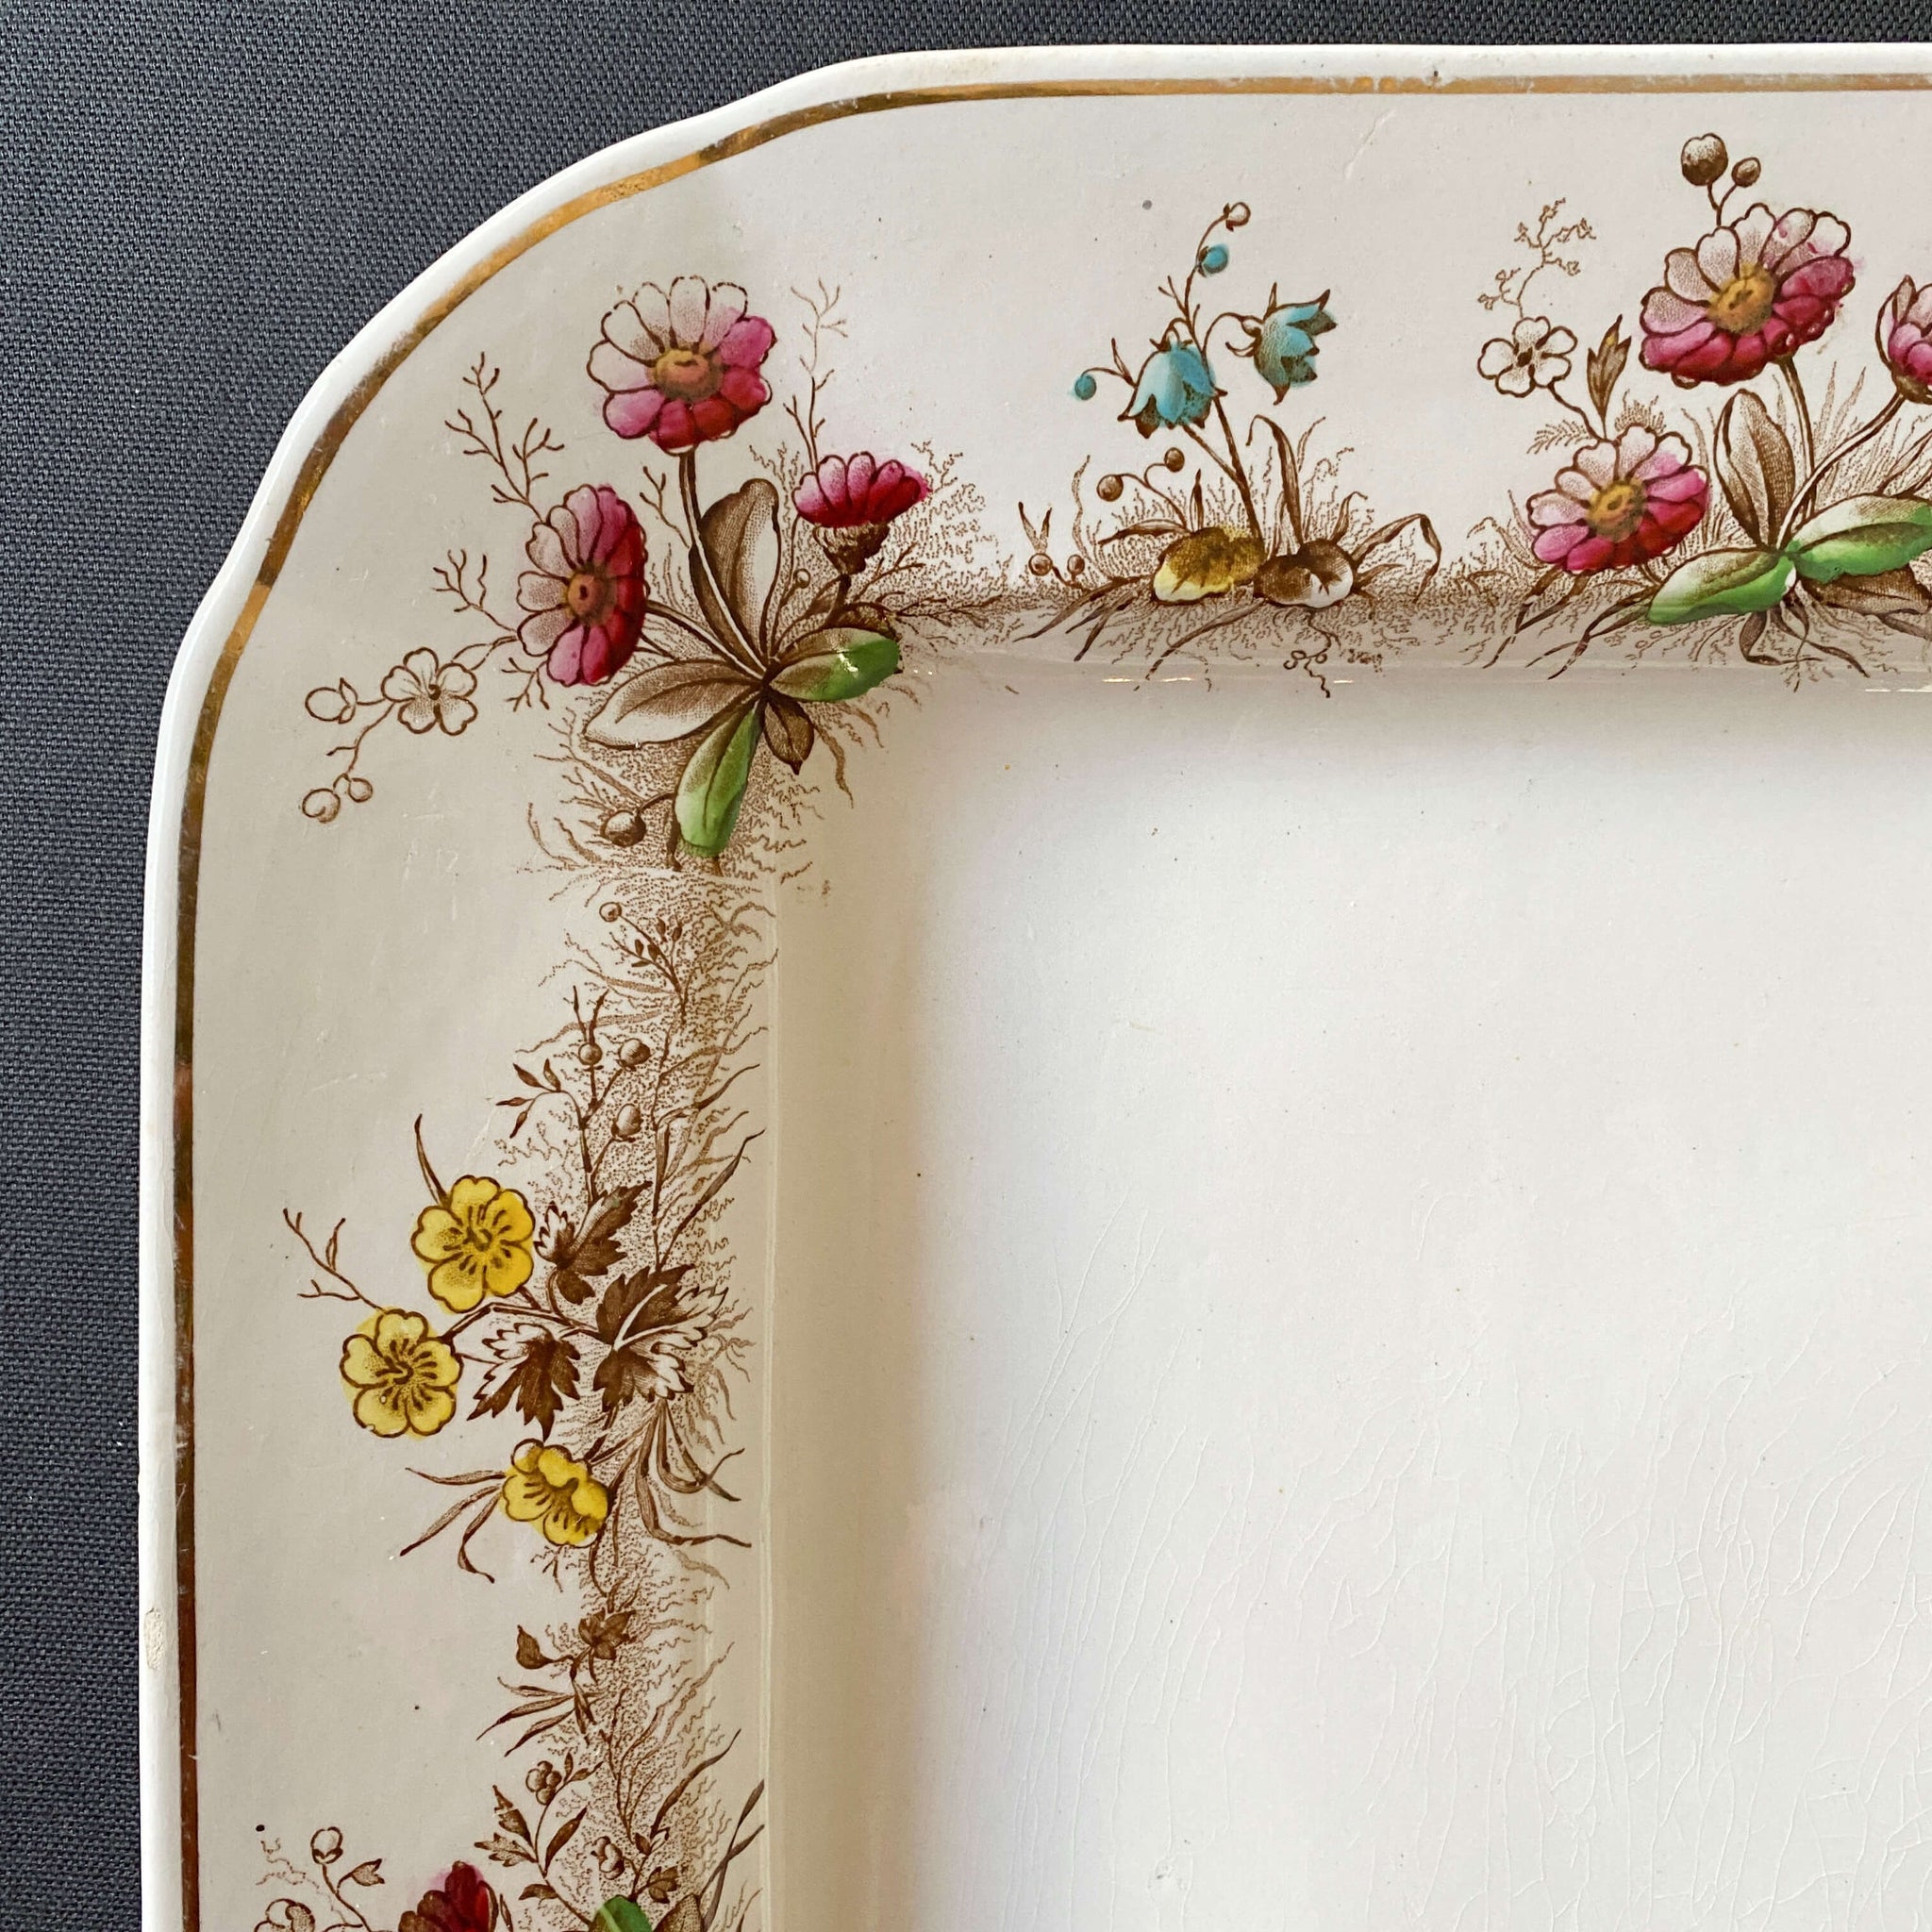 Rare Antique 1800s era Rectangular Platter - Cliff England Spring Pattern